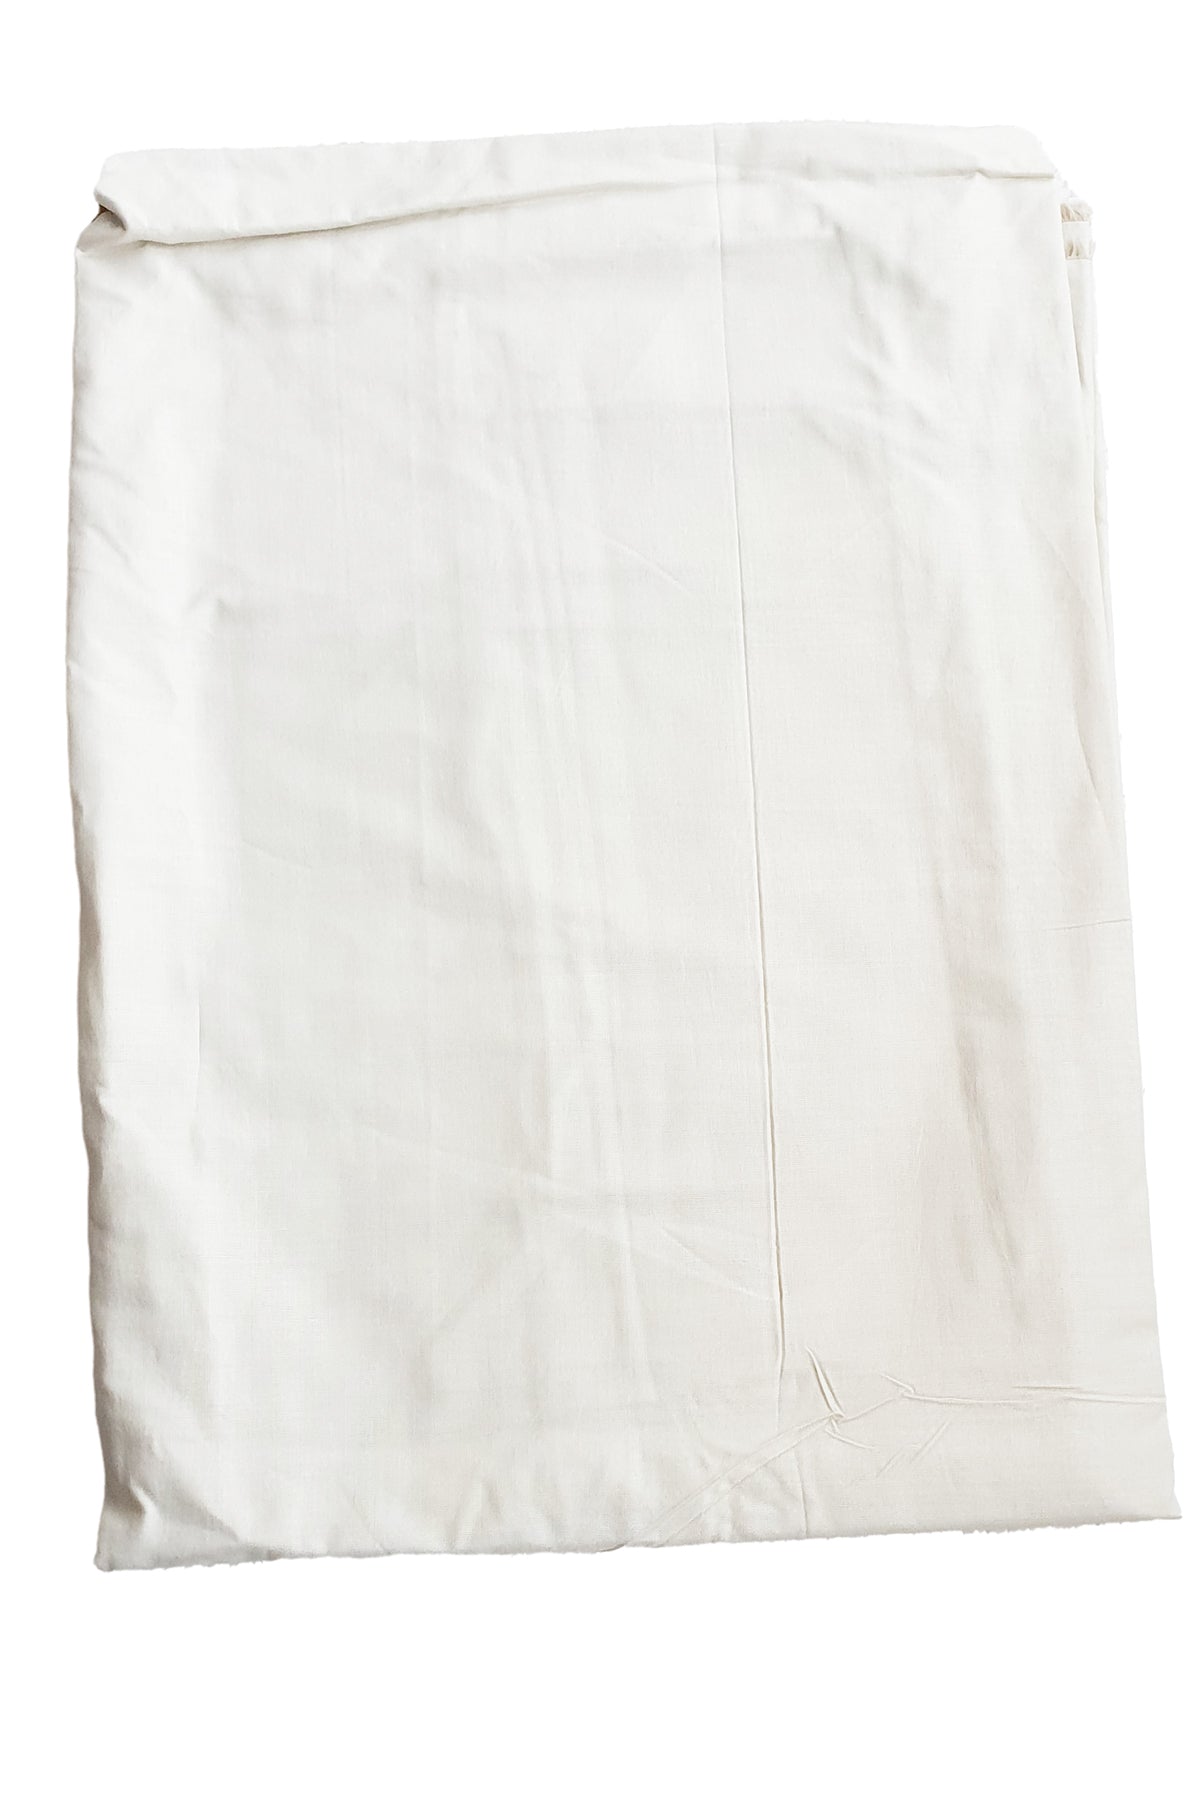 Cream Viscose Cotton Threadwork Embroidered Printed Suit Set